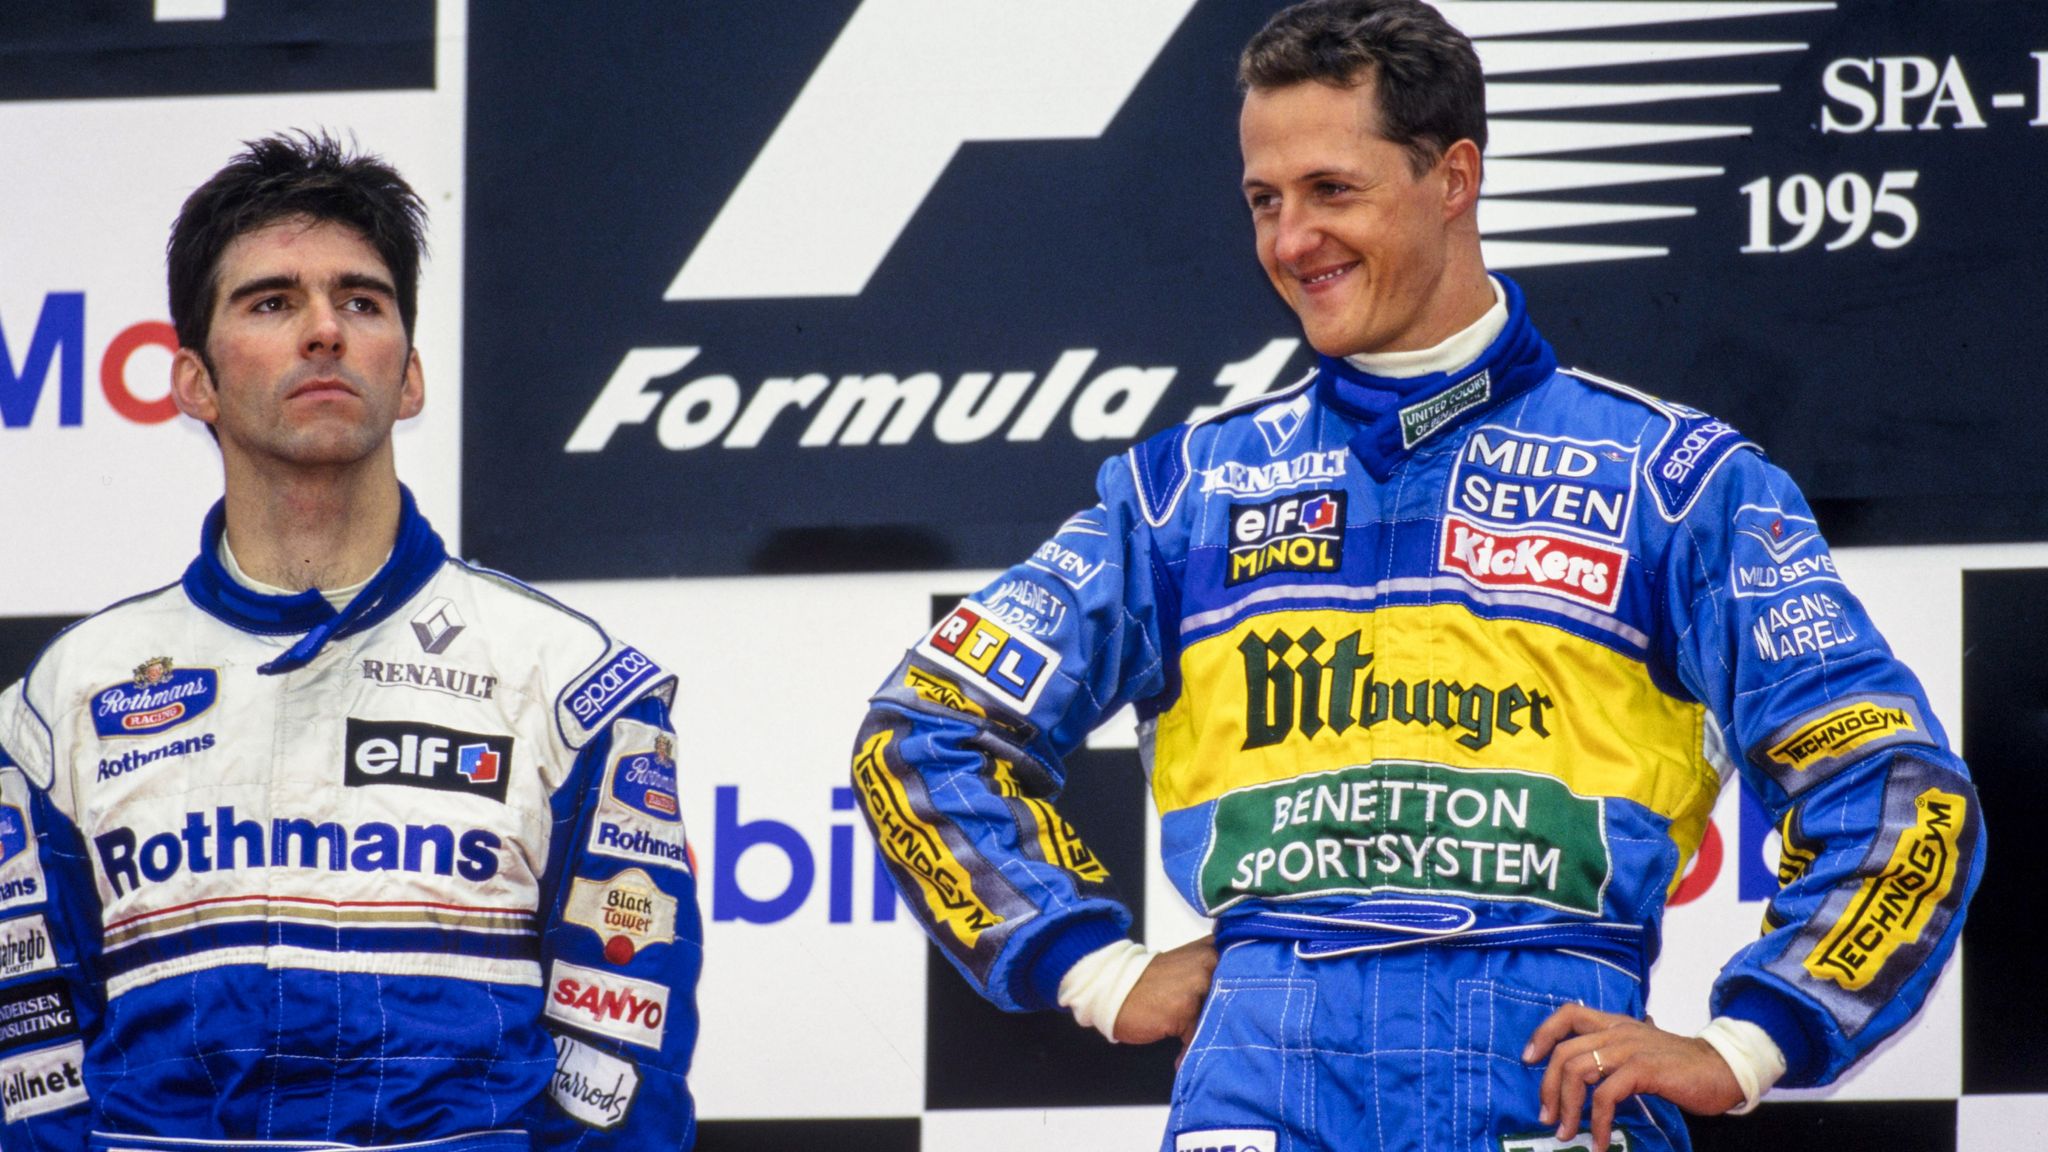 F1 driver Battles - Damon Hill and Micheal Schumacher in Spa 1995